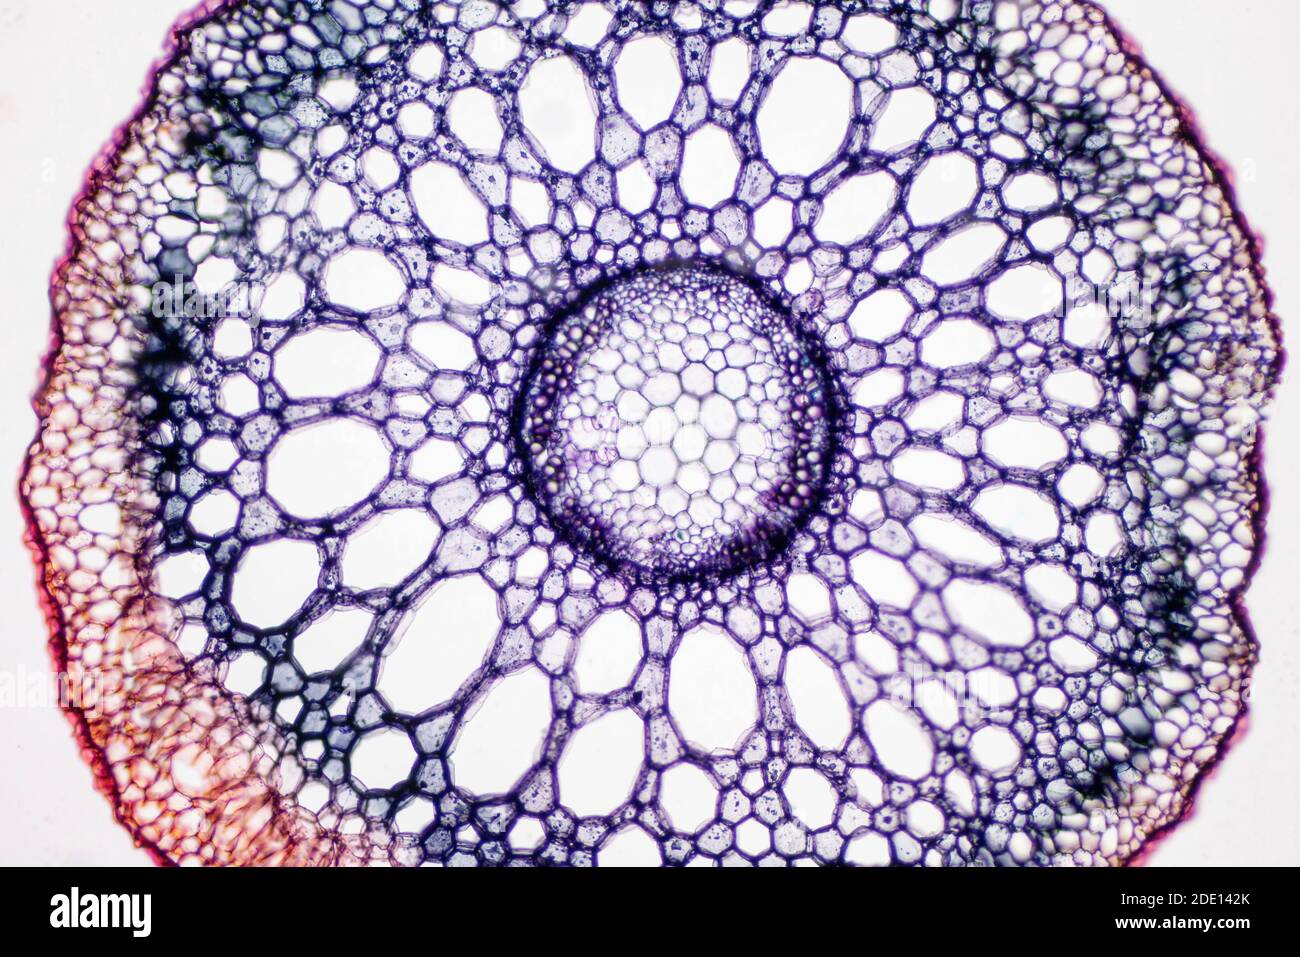 Plant root, light micrograph Stock Photo